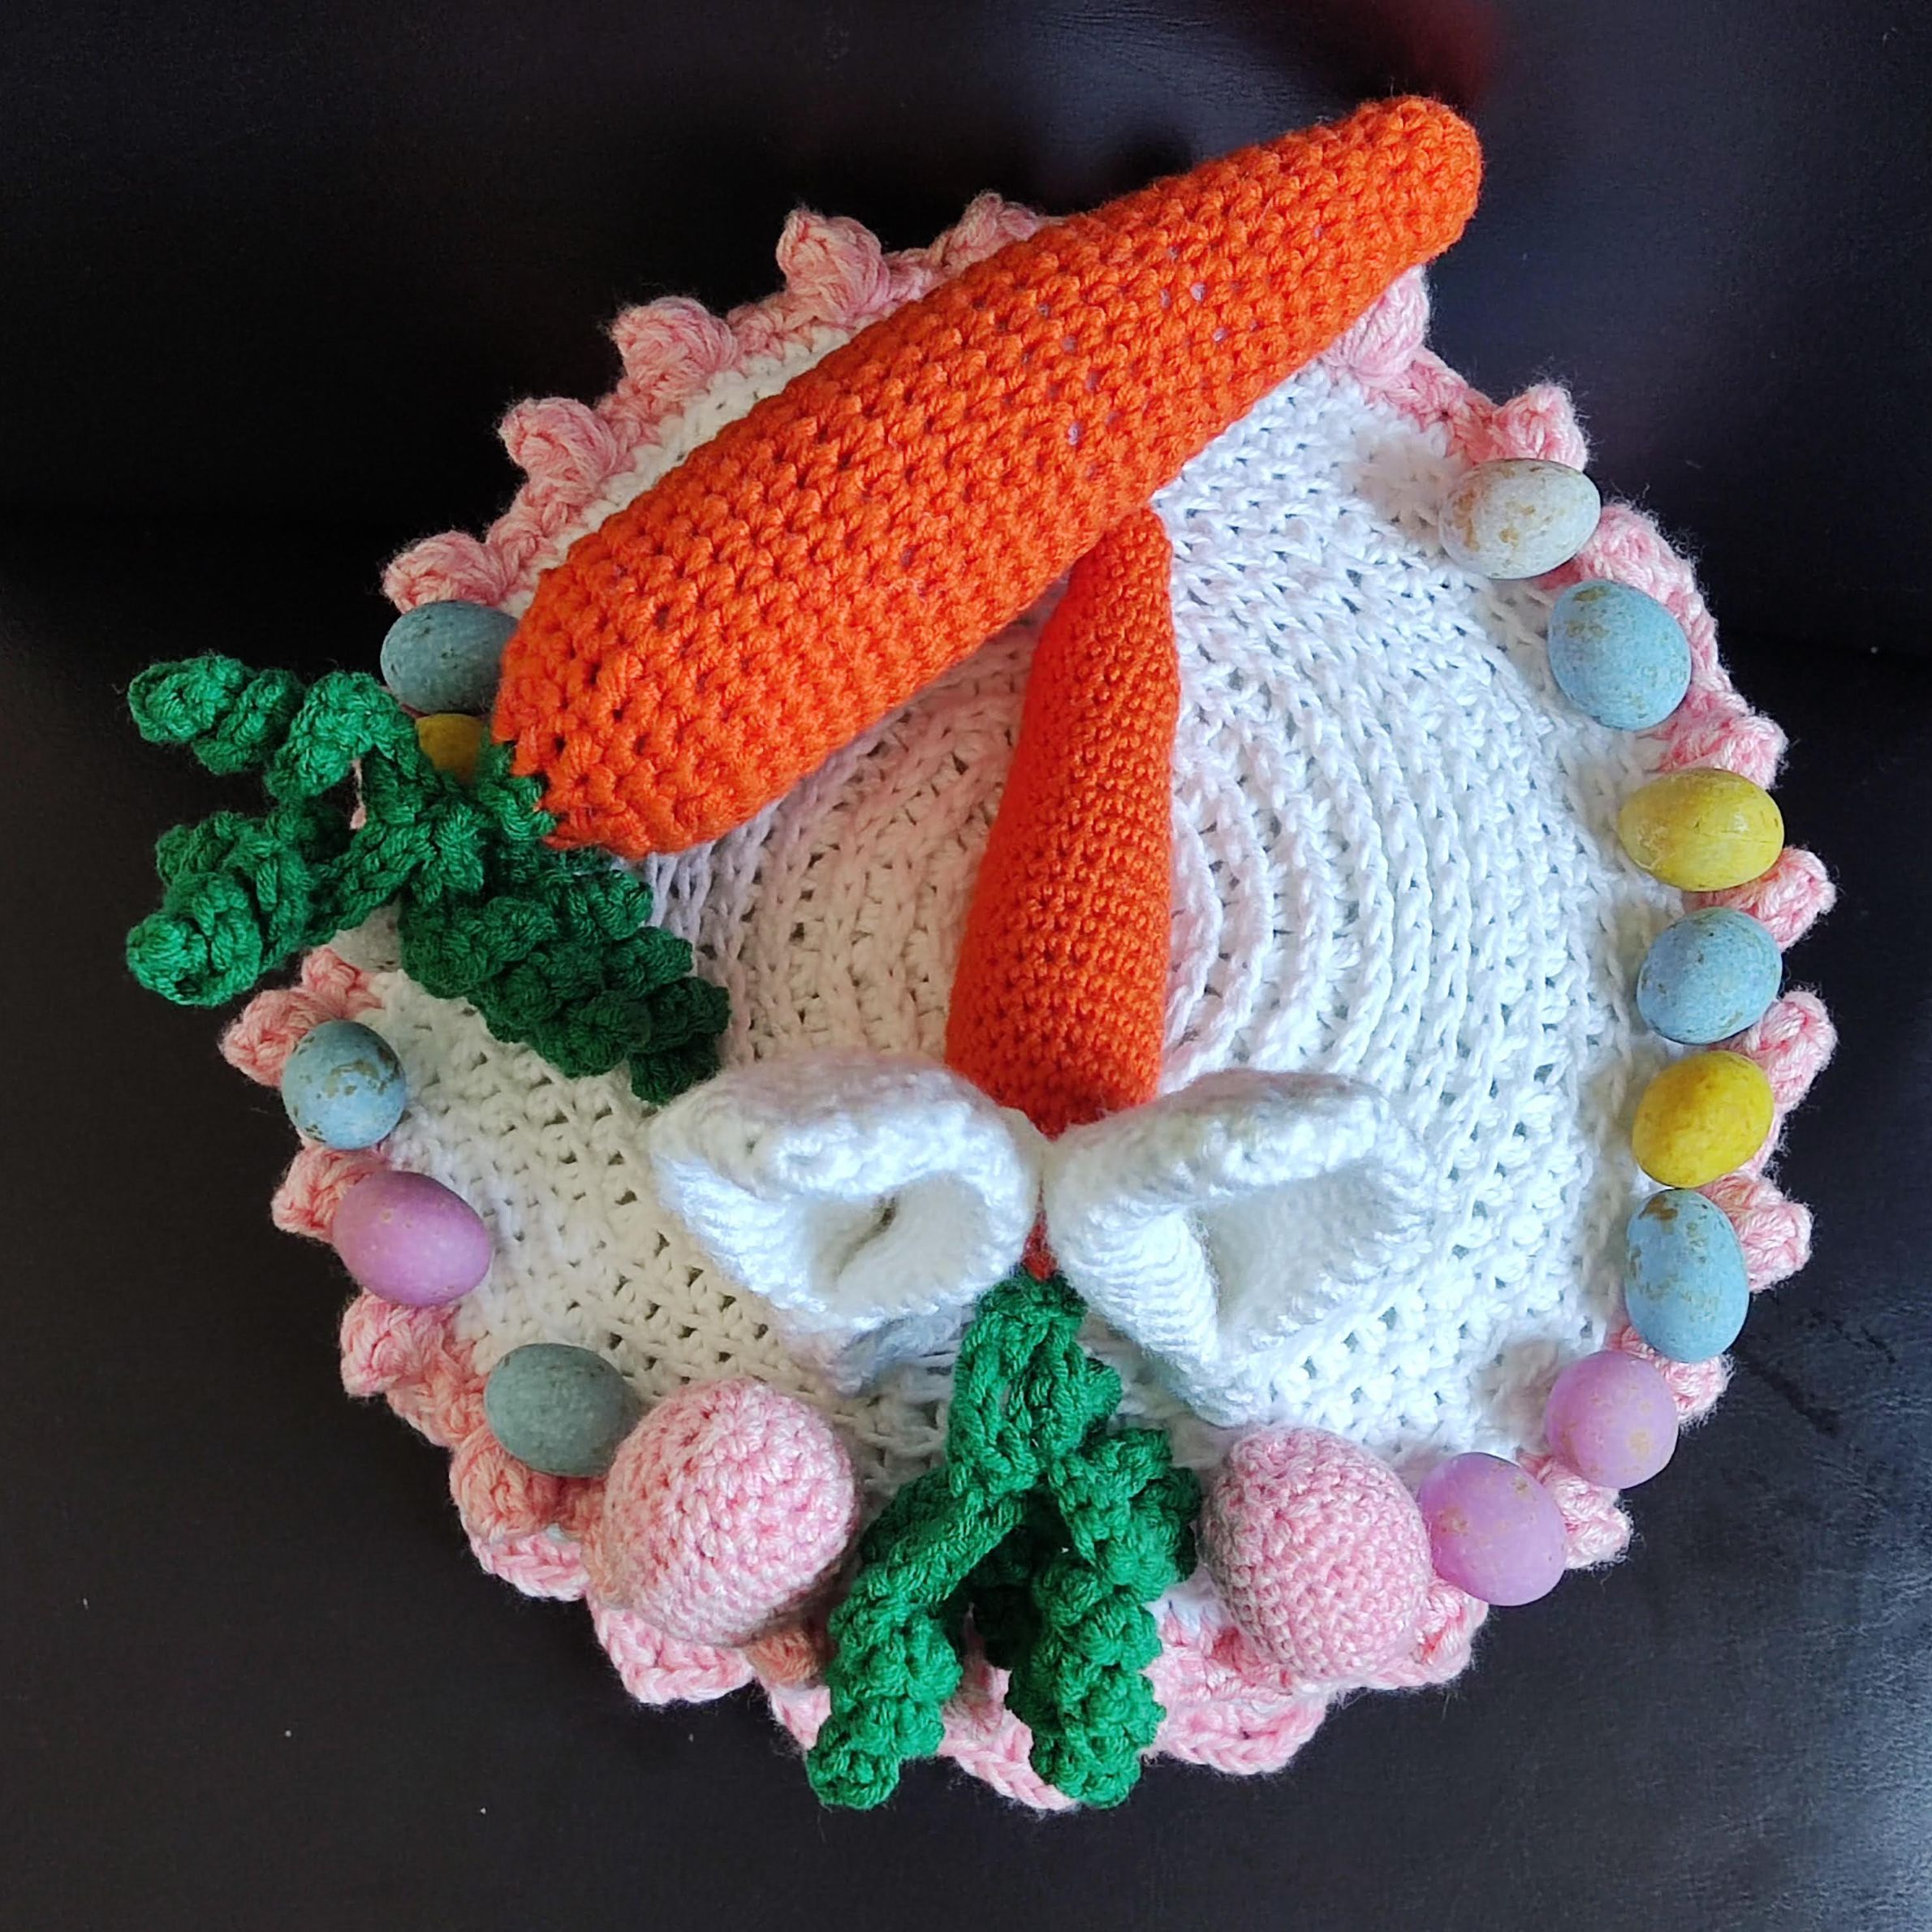 Crochet Bunny Cake Free pattern